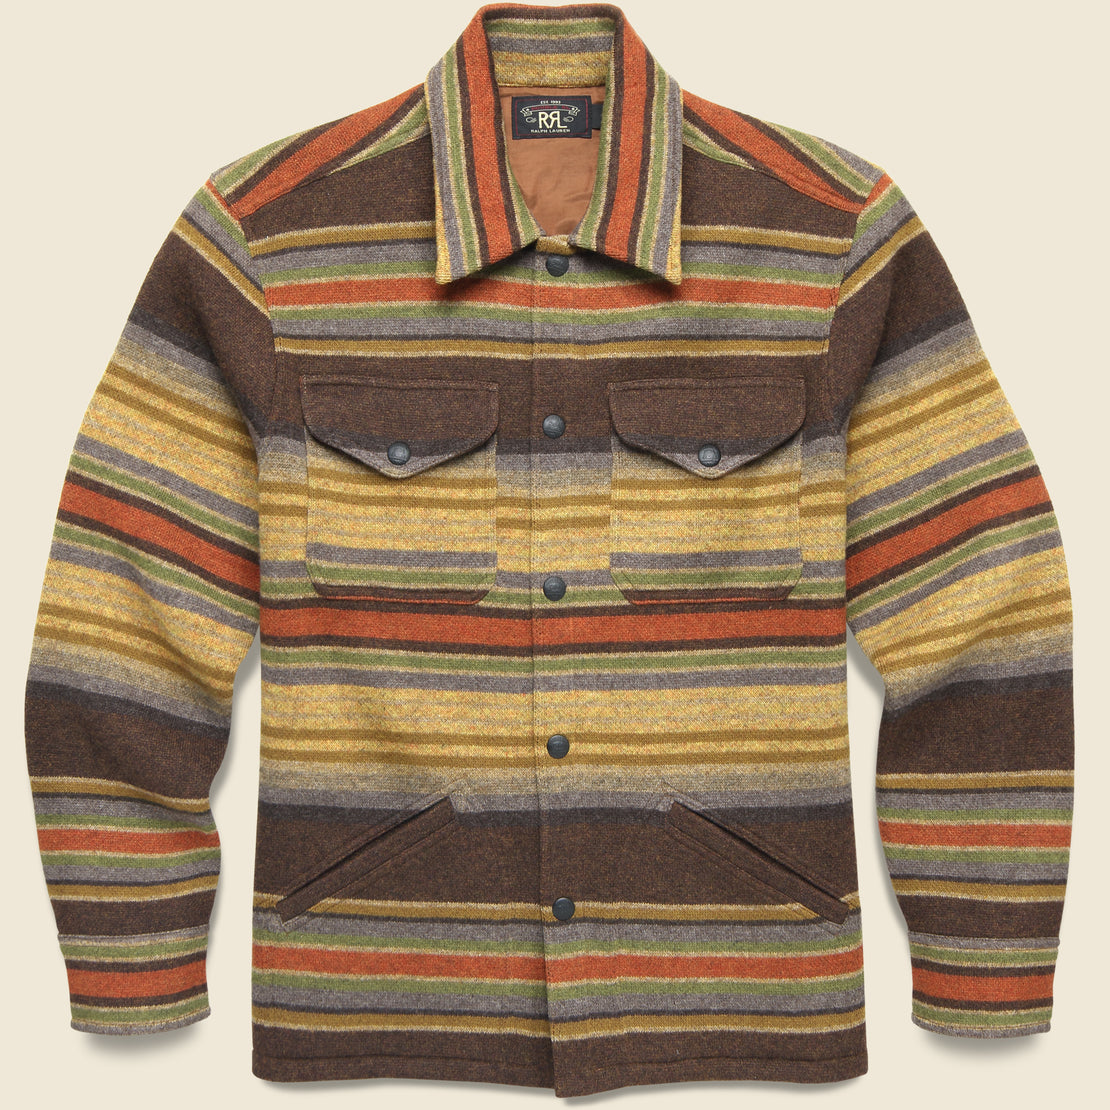 RRL 4-Pocket Jacquard Sweater Shirt - Brown Stripe Multi